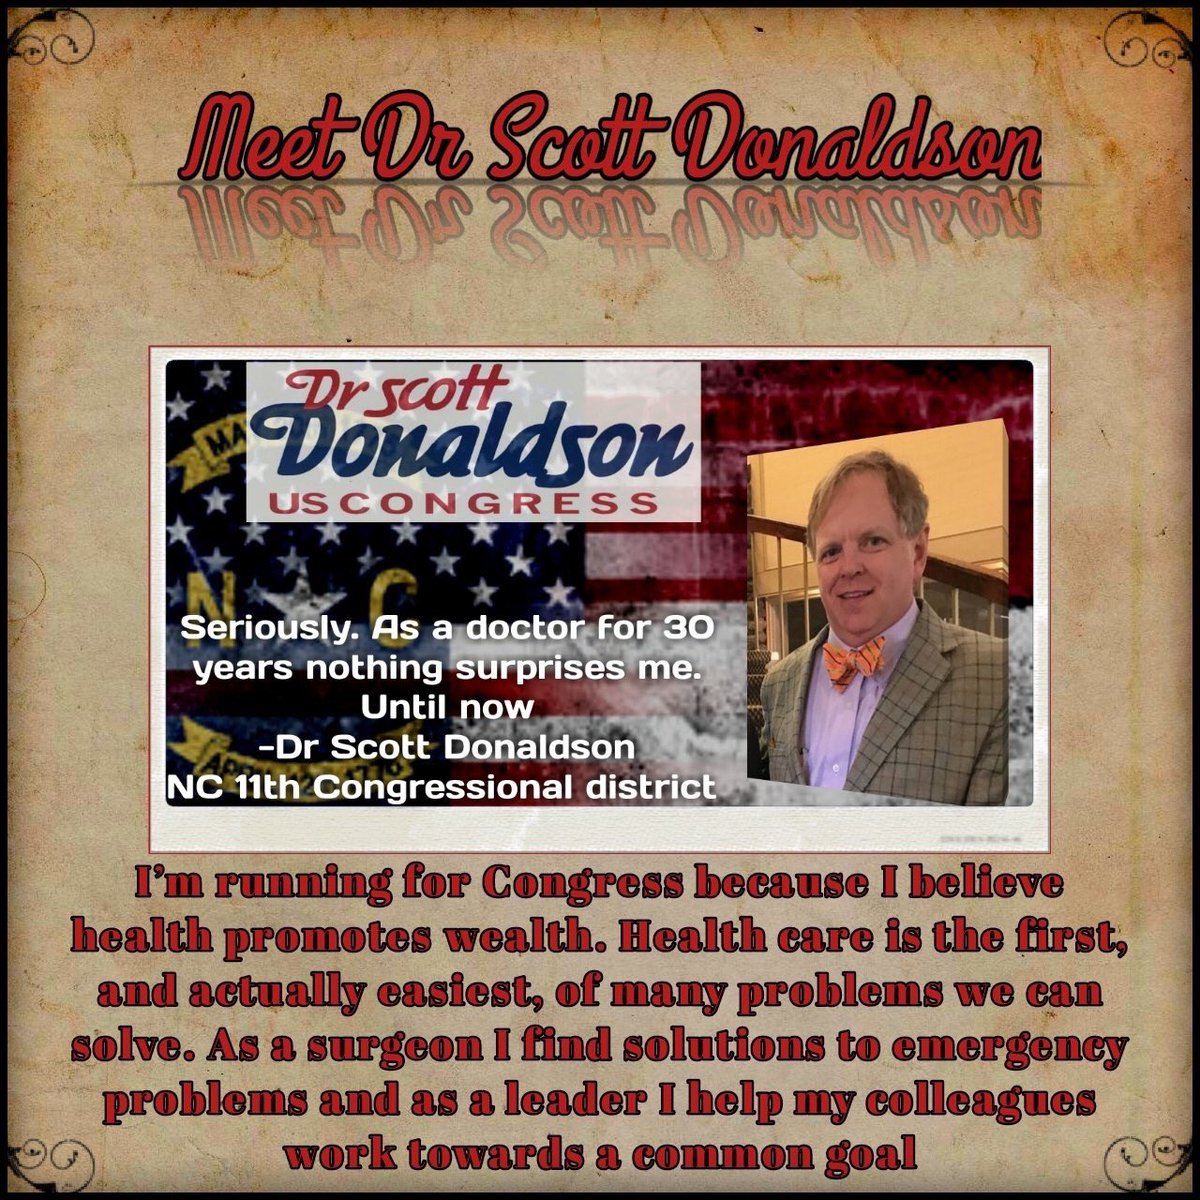 Have you met Dr. Scott Donaldson for #NC11? Allow me to introduce him now! Pls follow, volunteer, donate! #CleartheMeadows #ScottDonaldson4Congress #ncpol  #TheResistance #BlueWave #NCResists 
TY @TonyaLeeOrtega1 4graphics
     
scottdonaldsonforcongress.com 
           @SDonaldsonNC11